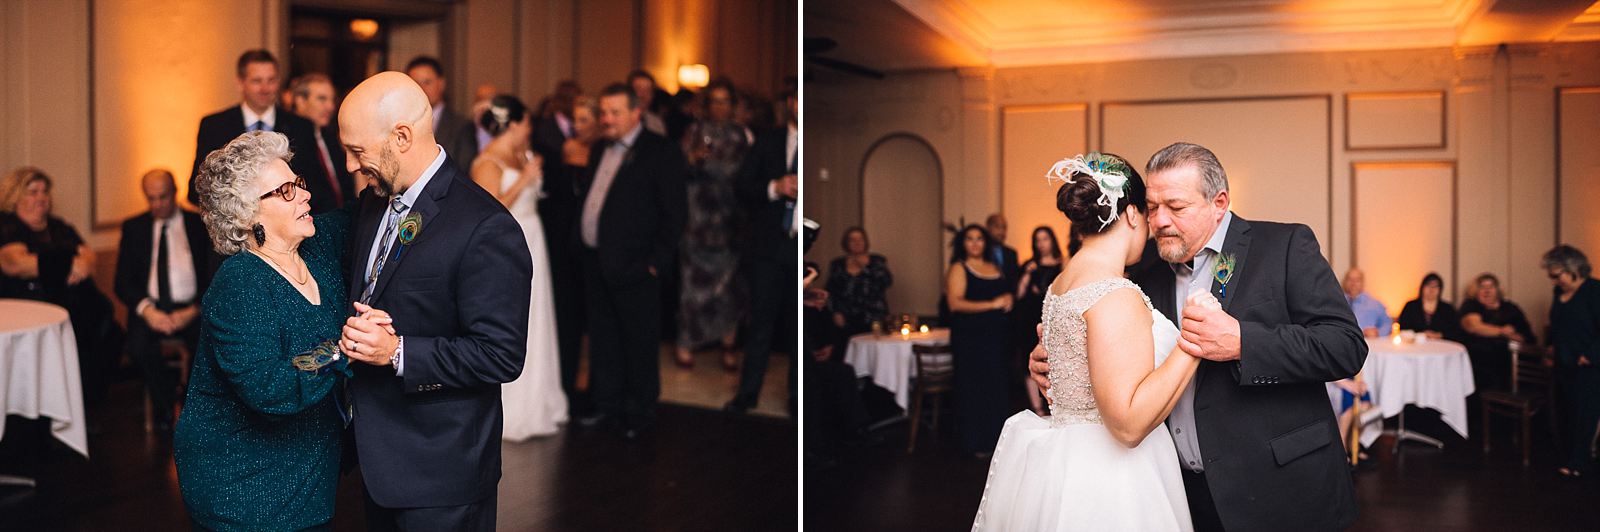 56 first dances - Salvatores Chicago Wedding Photos // Jen + Bob